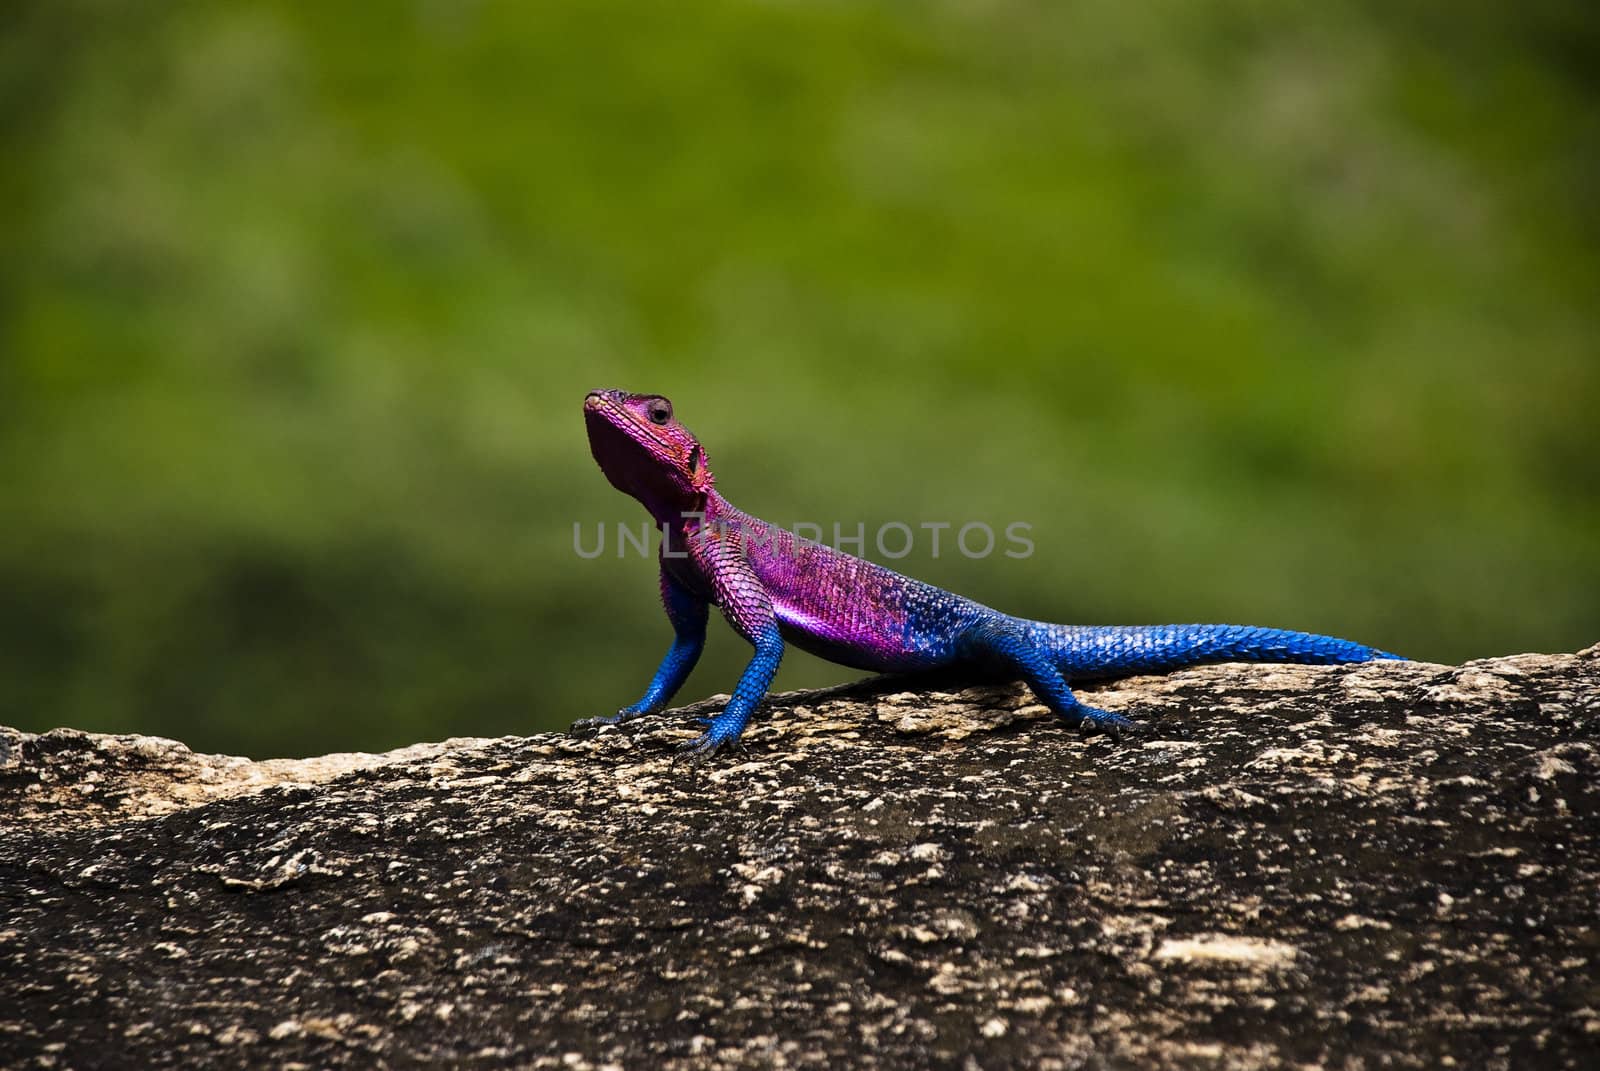 A colourful agama lizard sunbathing on a rock in africa